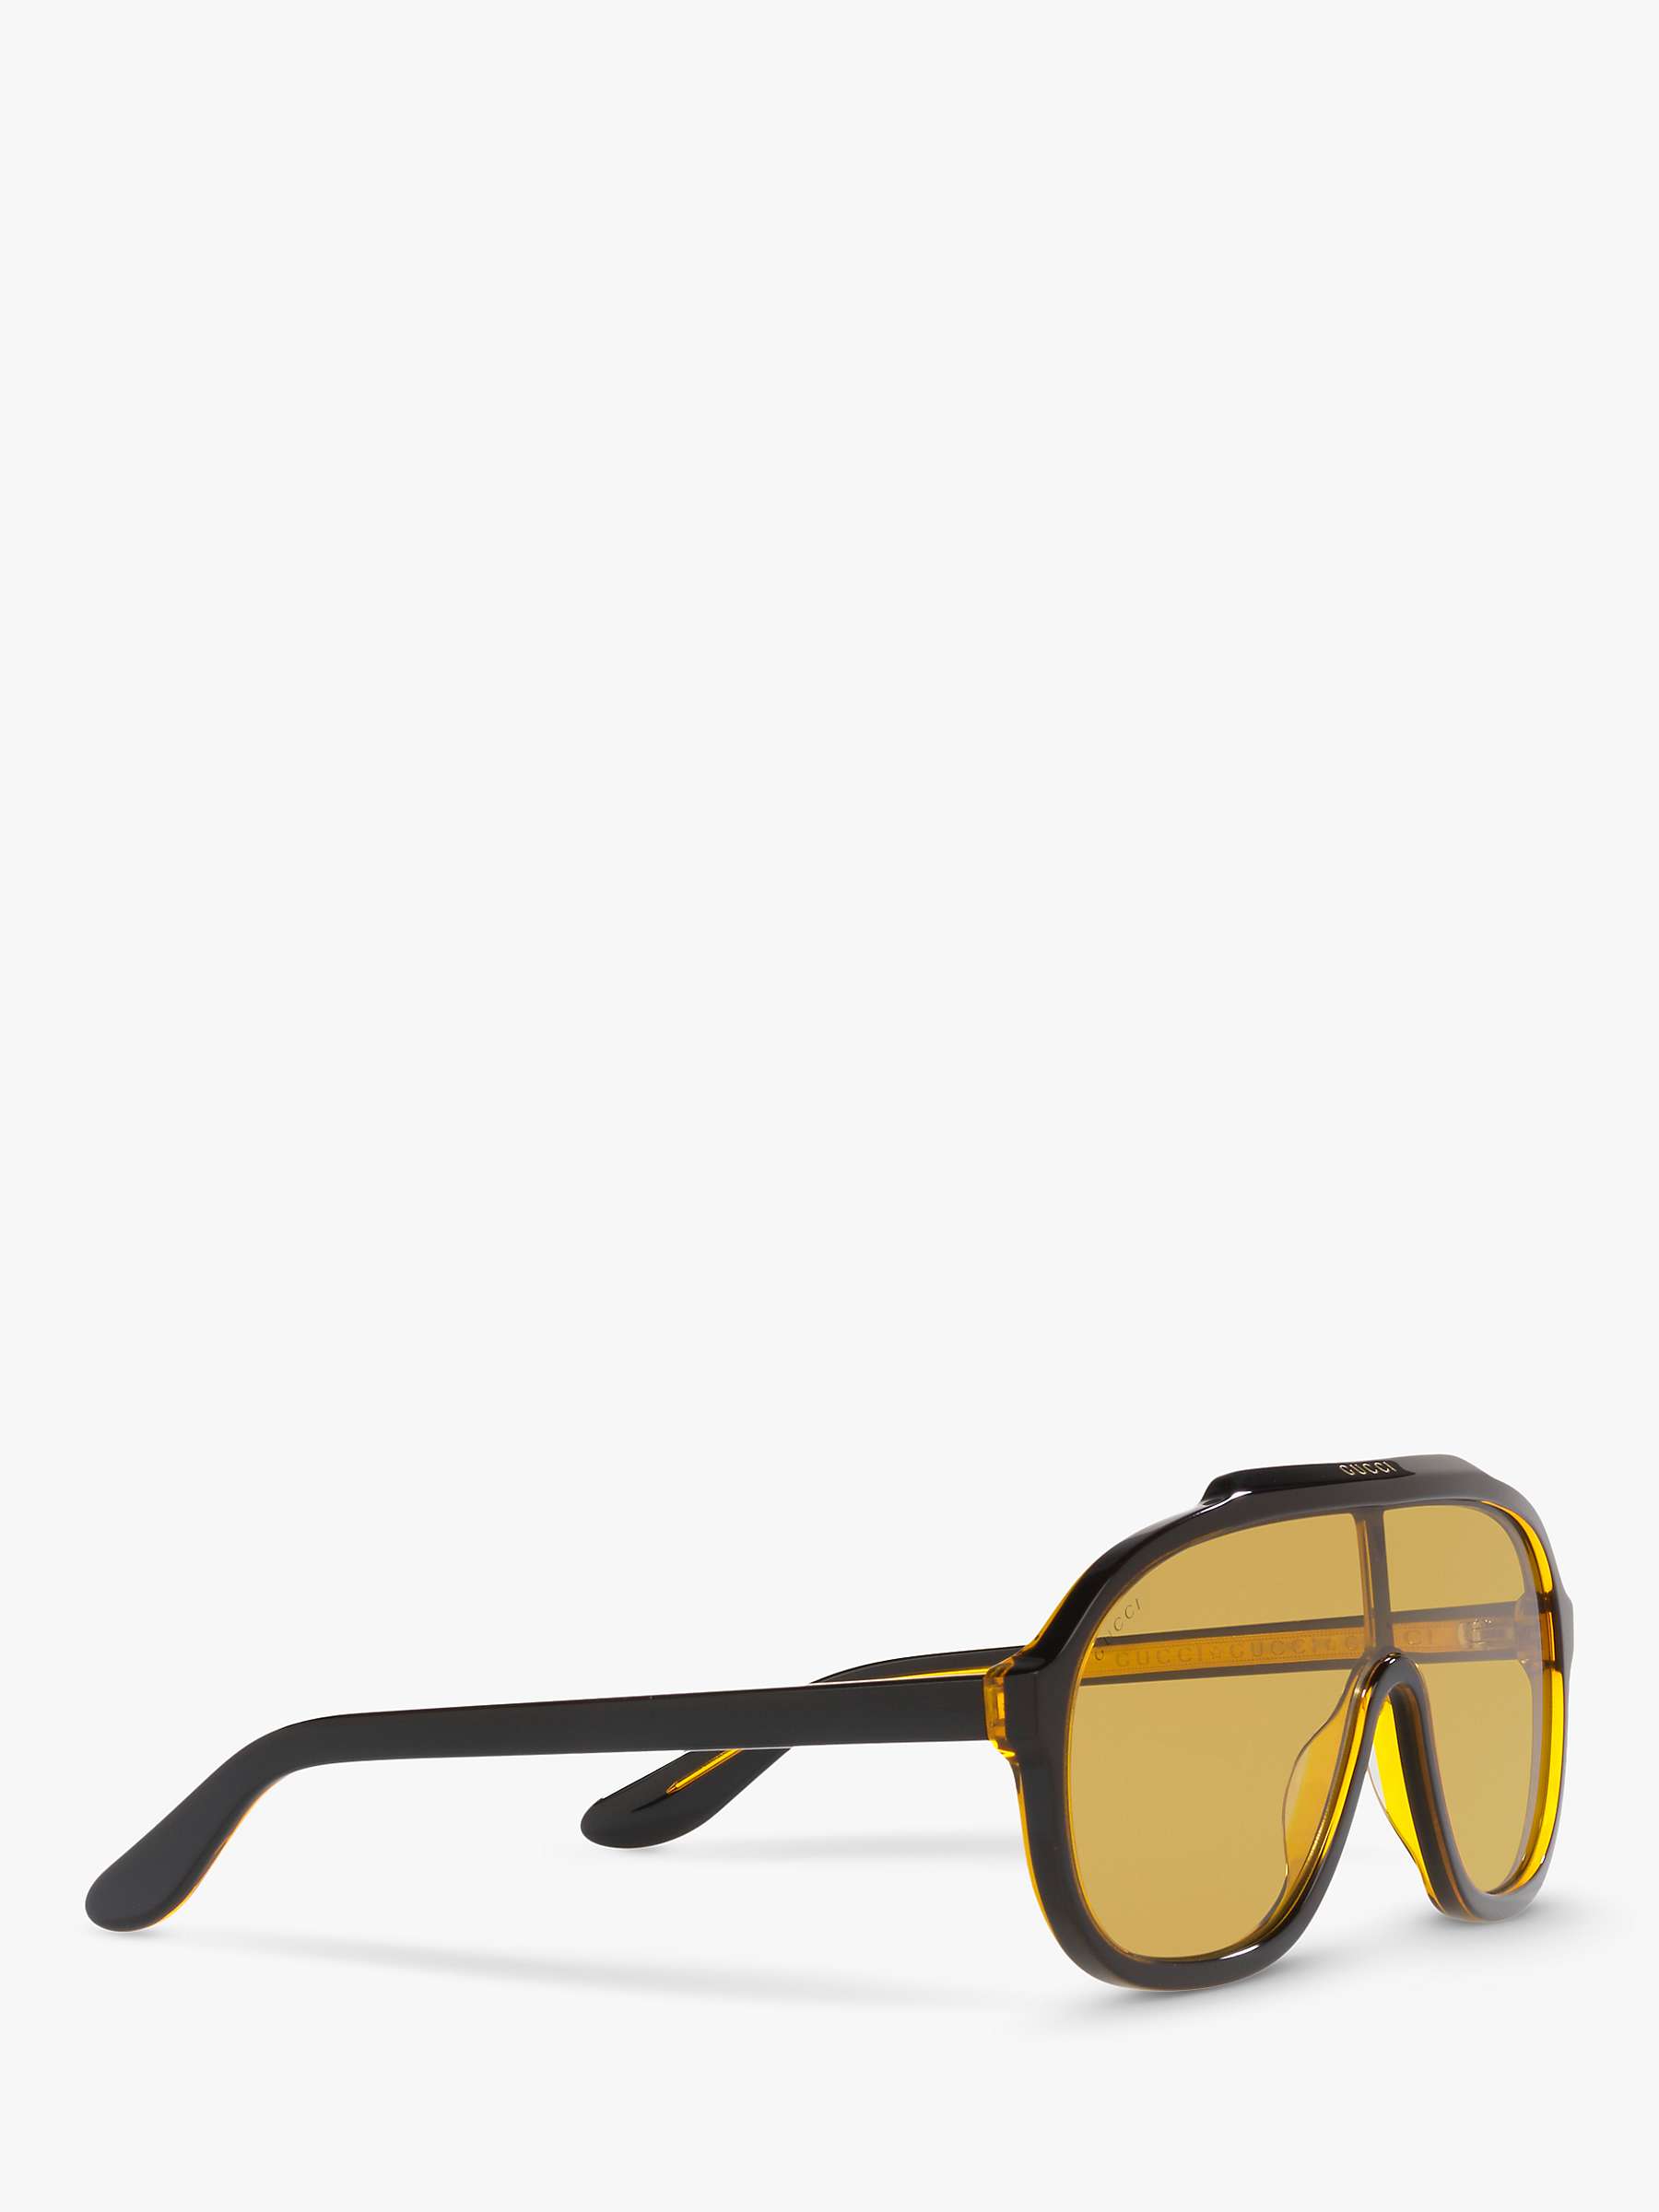 Buy Gucci GG1038S Men's s Pilot Sunglasses, Black/Yellow Online at johnlewis.com